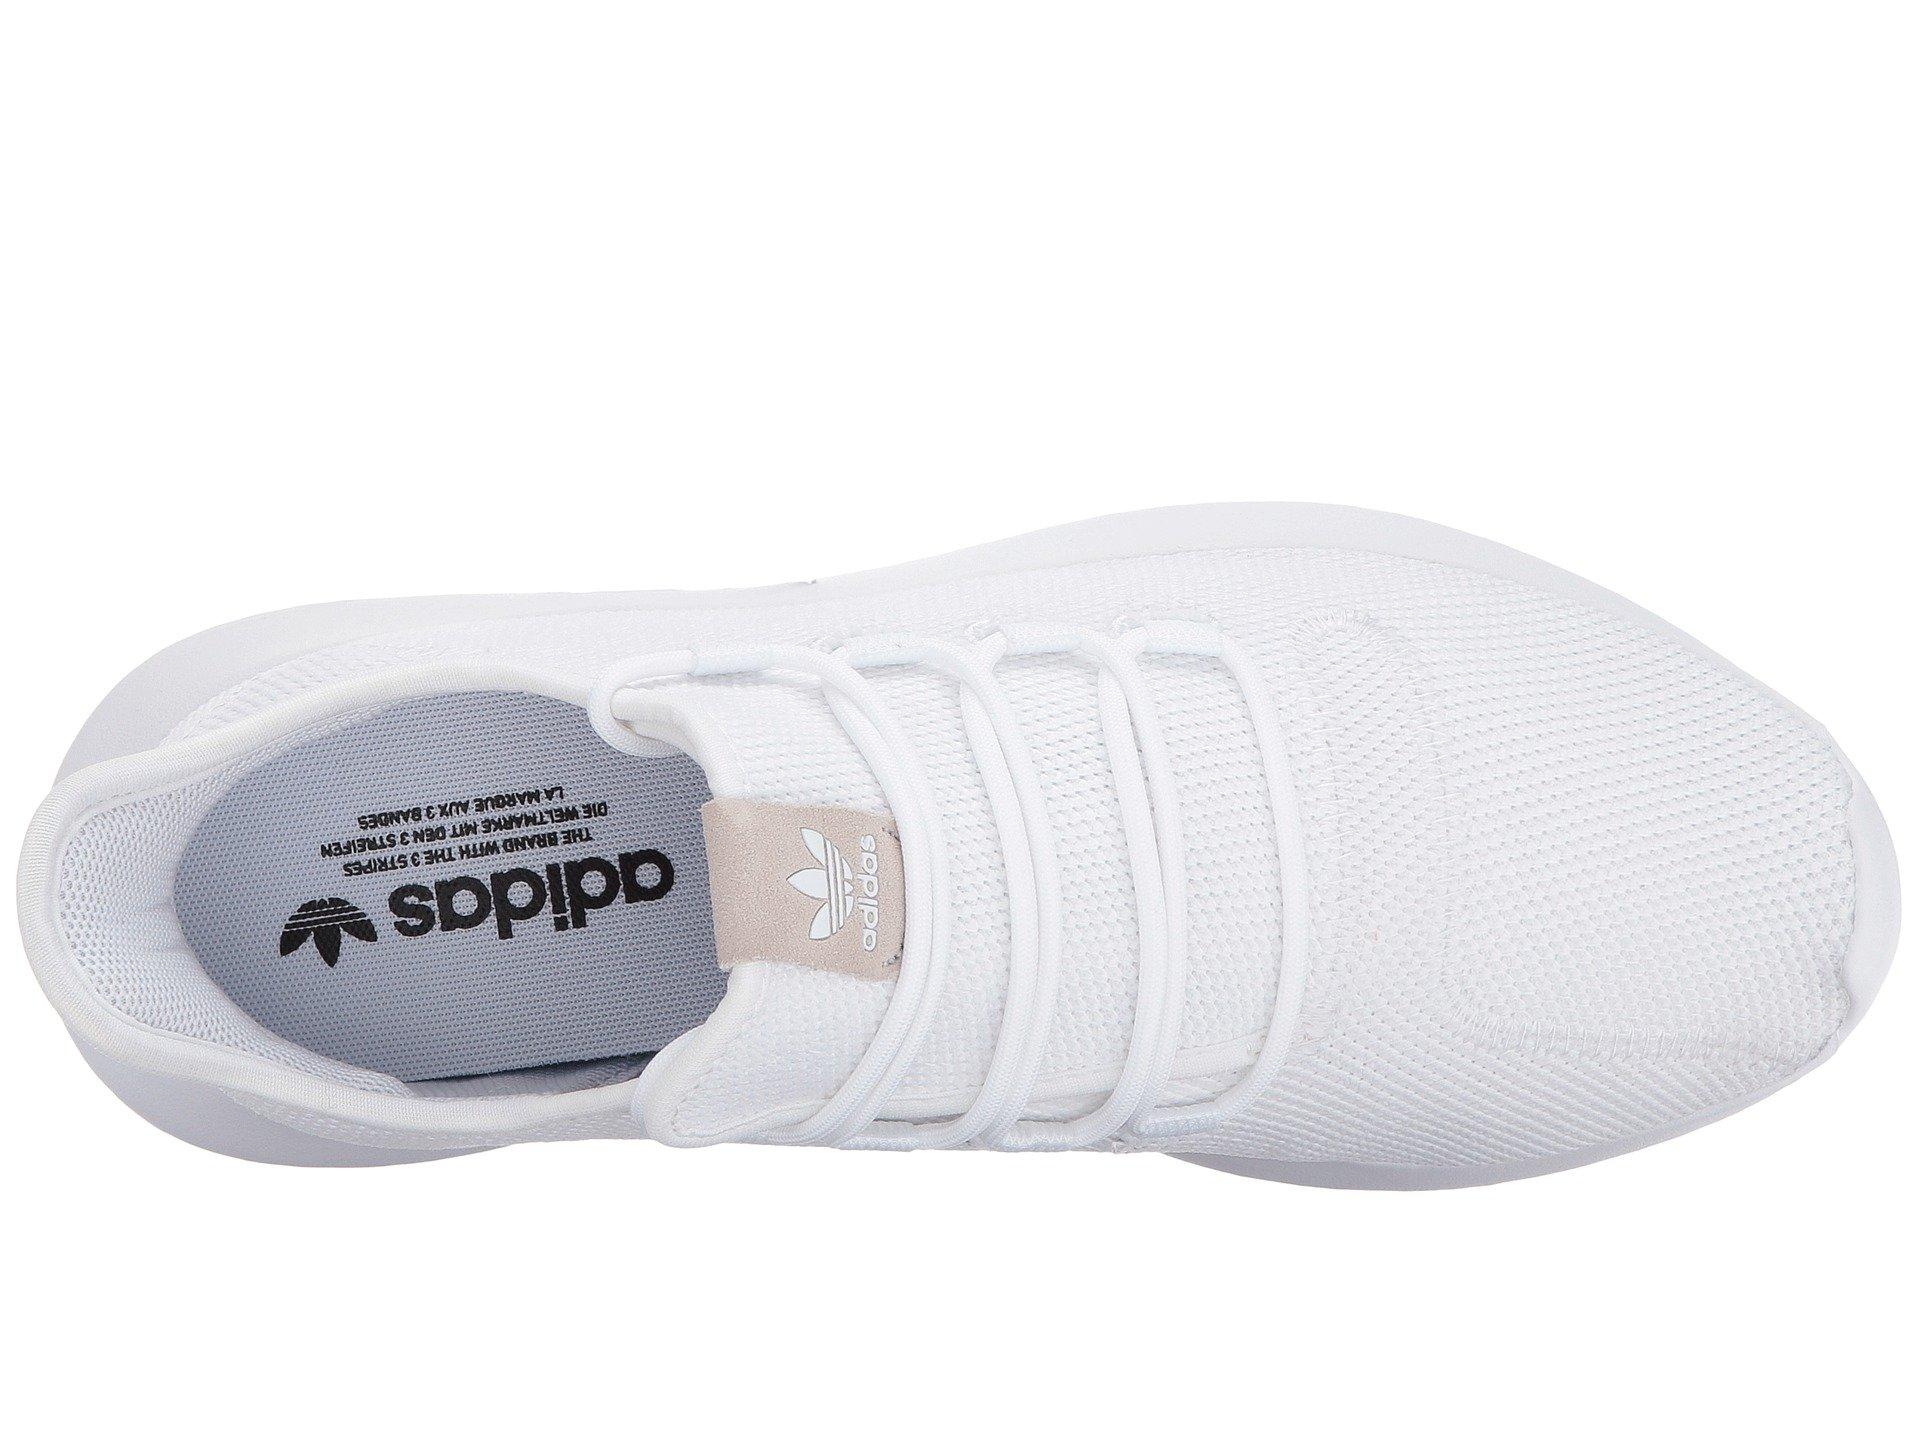 adidas Originals Rubber Tubular Shadow Running Shoe in White/Black/White  (White) for Men - Lyst